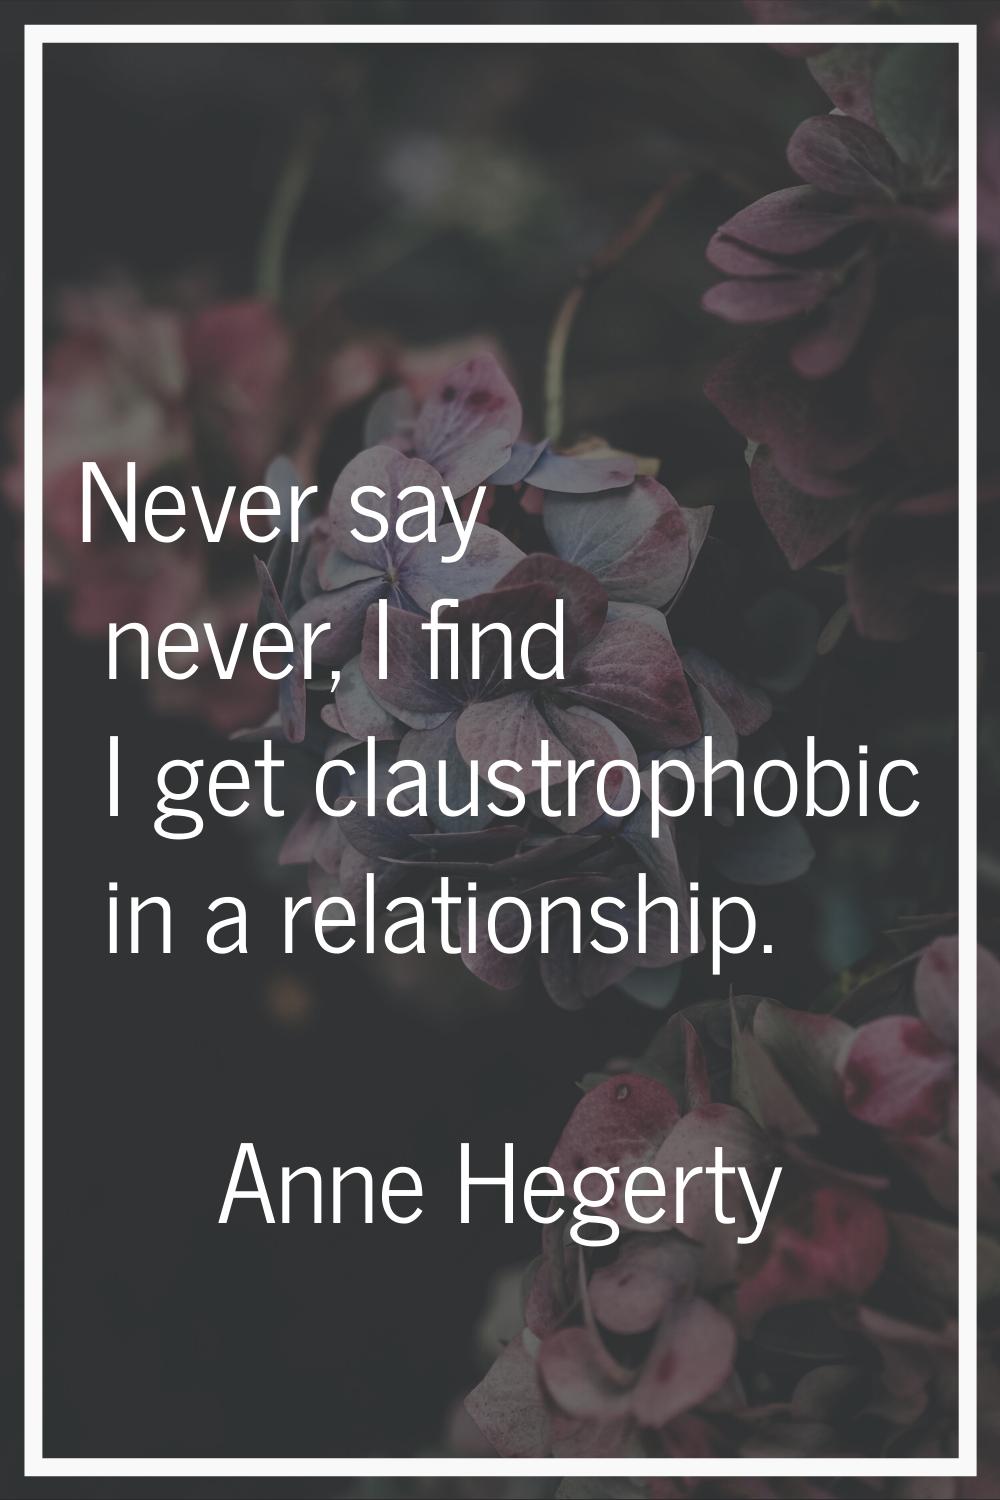 Never say never, I find I get claustrophobic in a relationship.